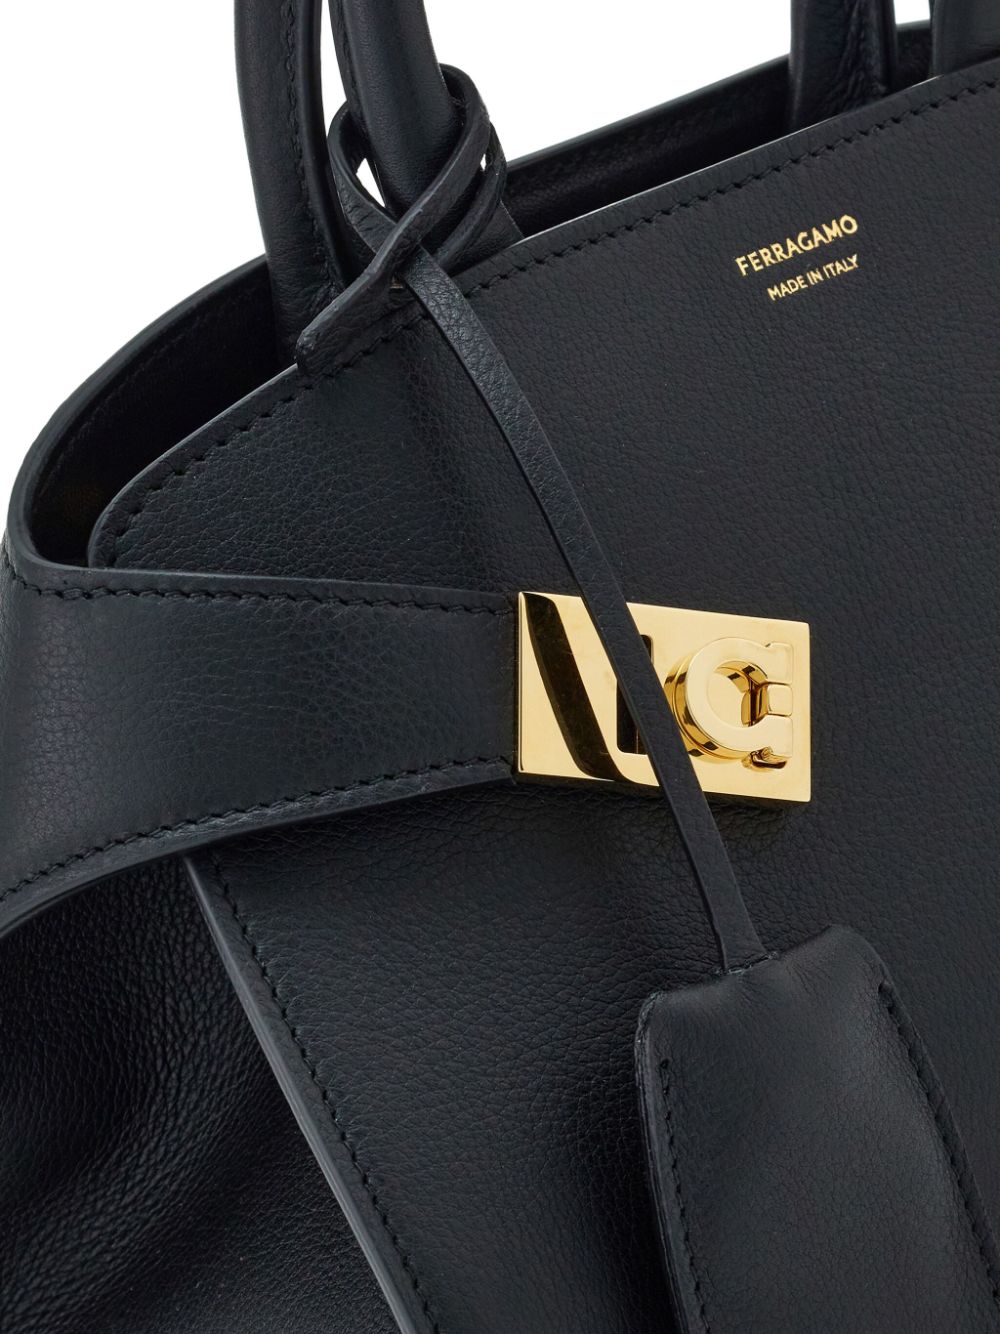 Ferragamo FERRAGAMO- Hug Soft Mini Leather Handbag